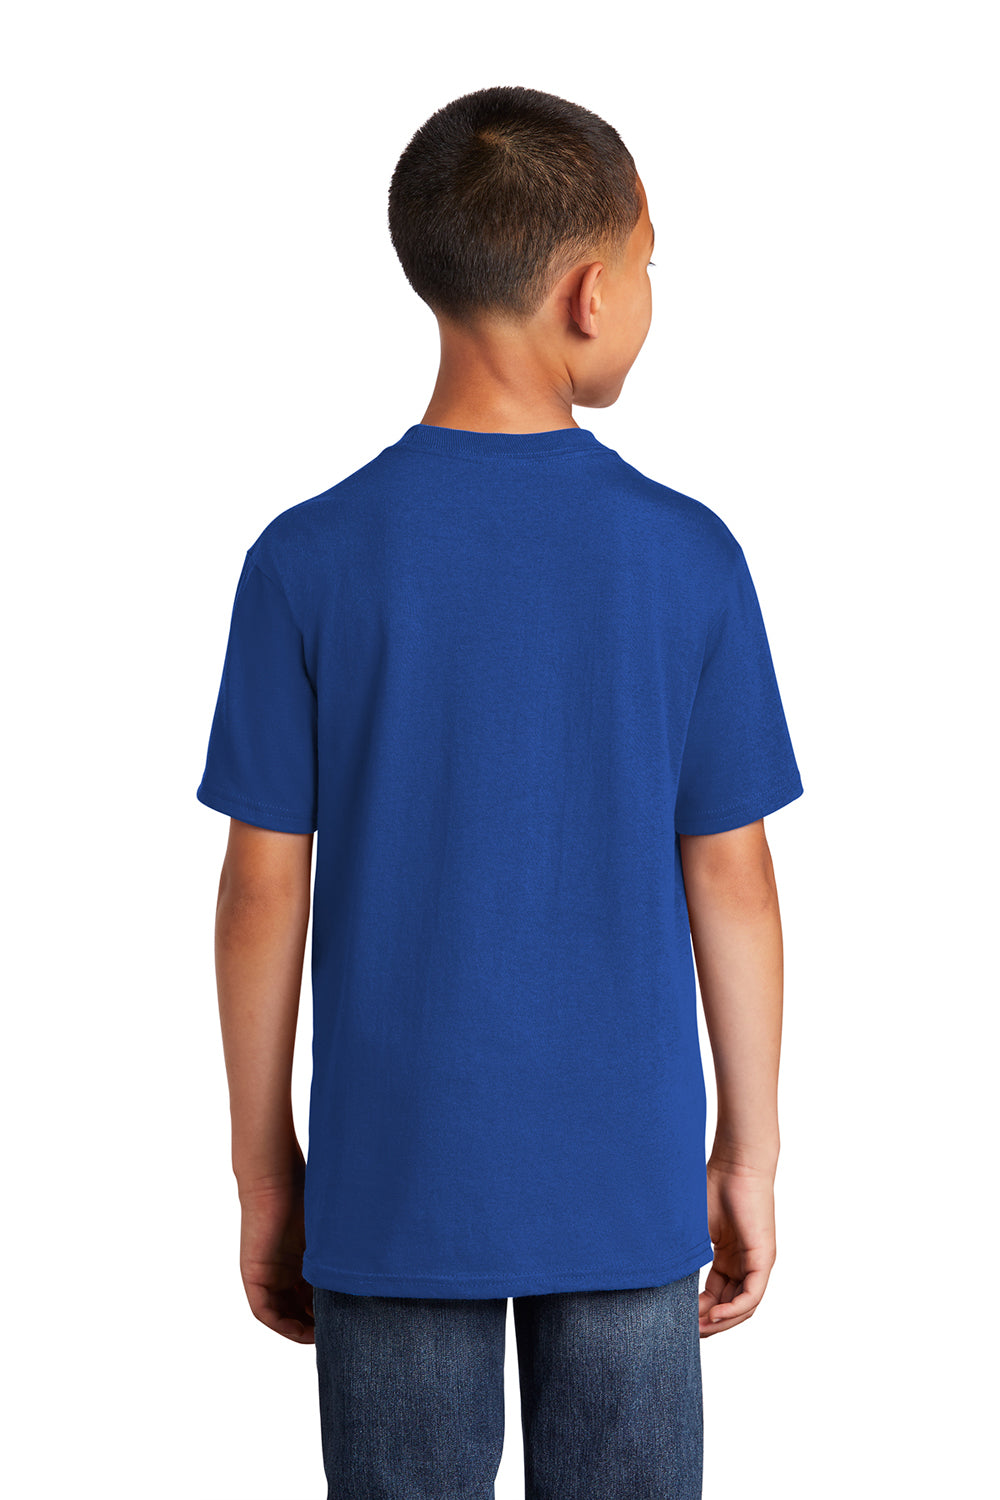 Port & Company PC54Y Youth Core Short Sleeve Crewneck T-Shirt True Royal Blue Back